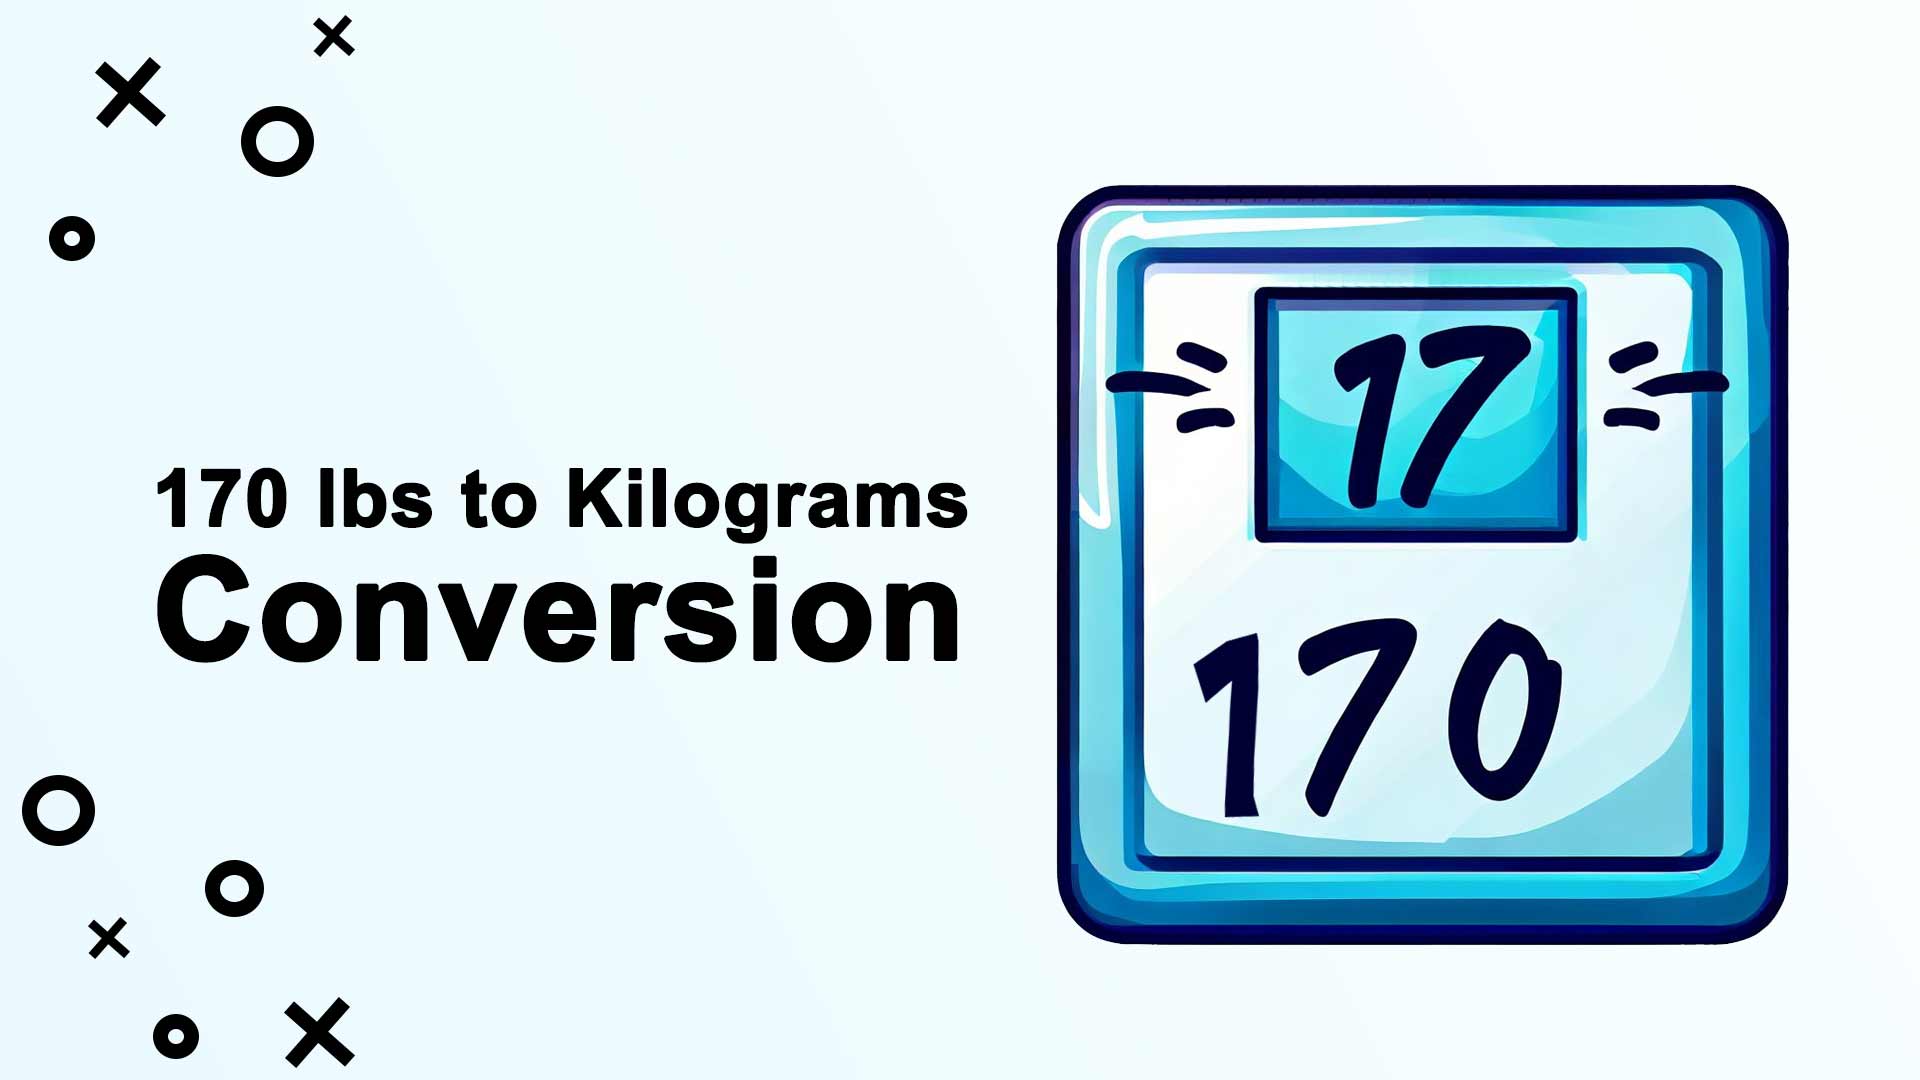 170 lbs to Kilograms Conversion